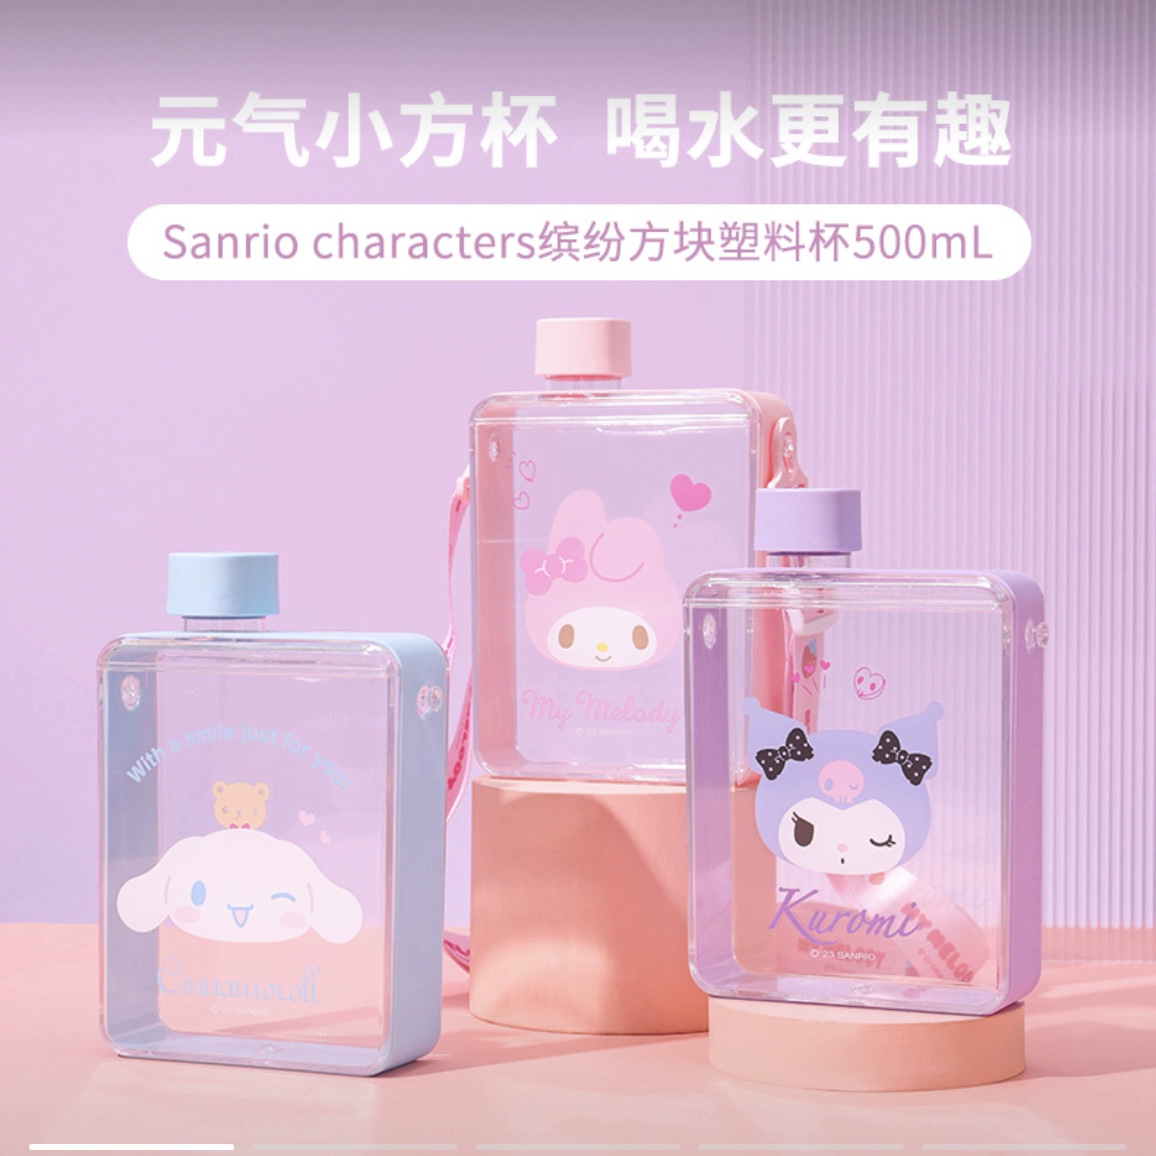 MINISO名创优品Sanrio Characters缤纷方块塑料杯500mL方形水杯